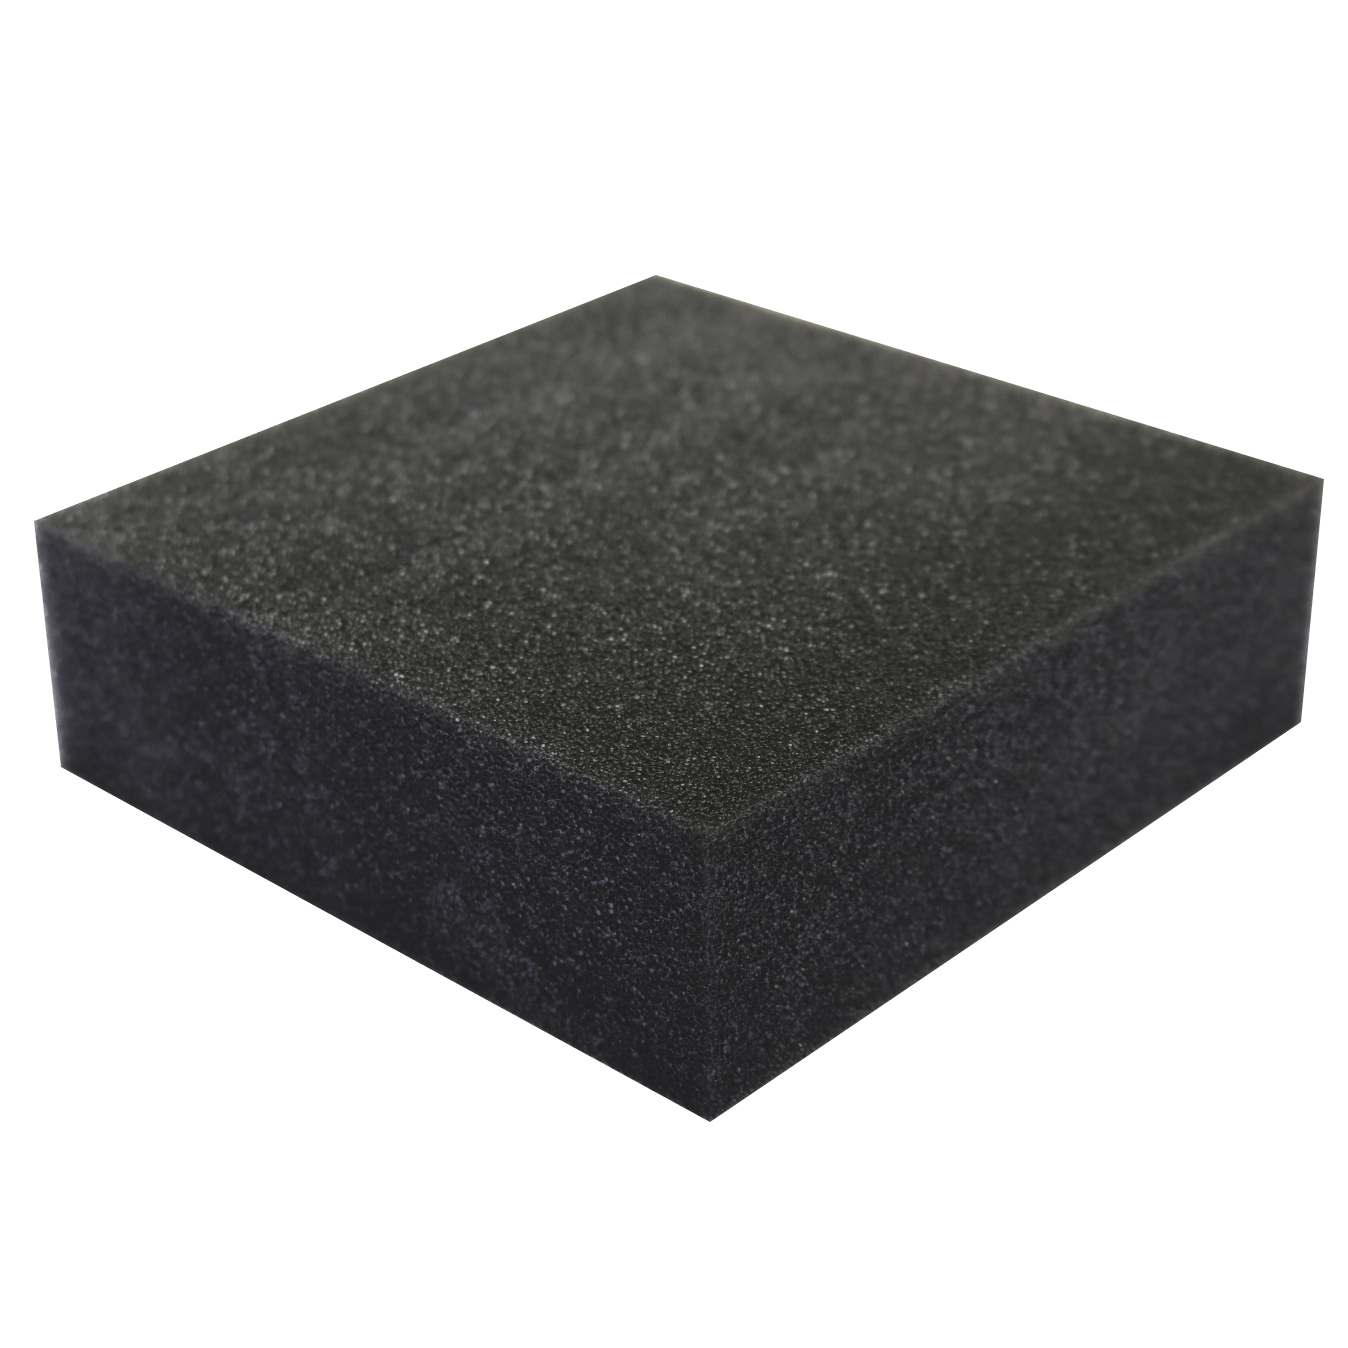 Polyethylene Foam Material - The Rubber Company